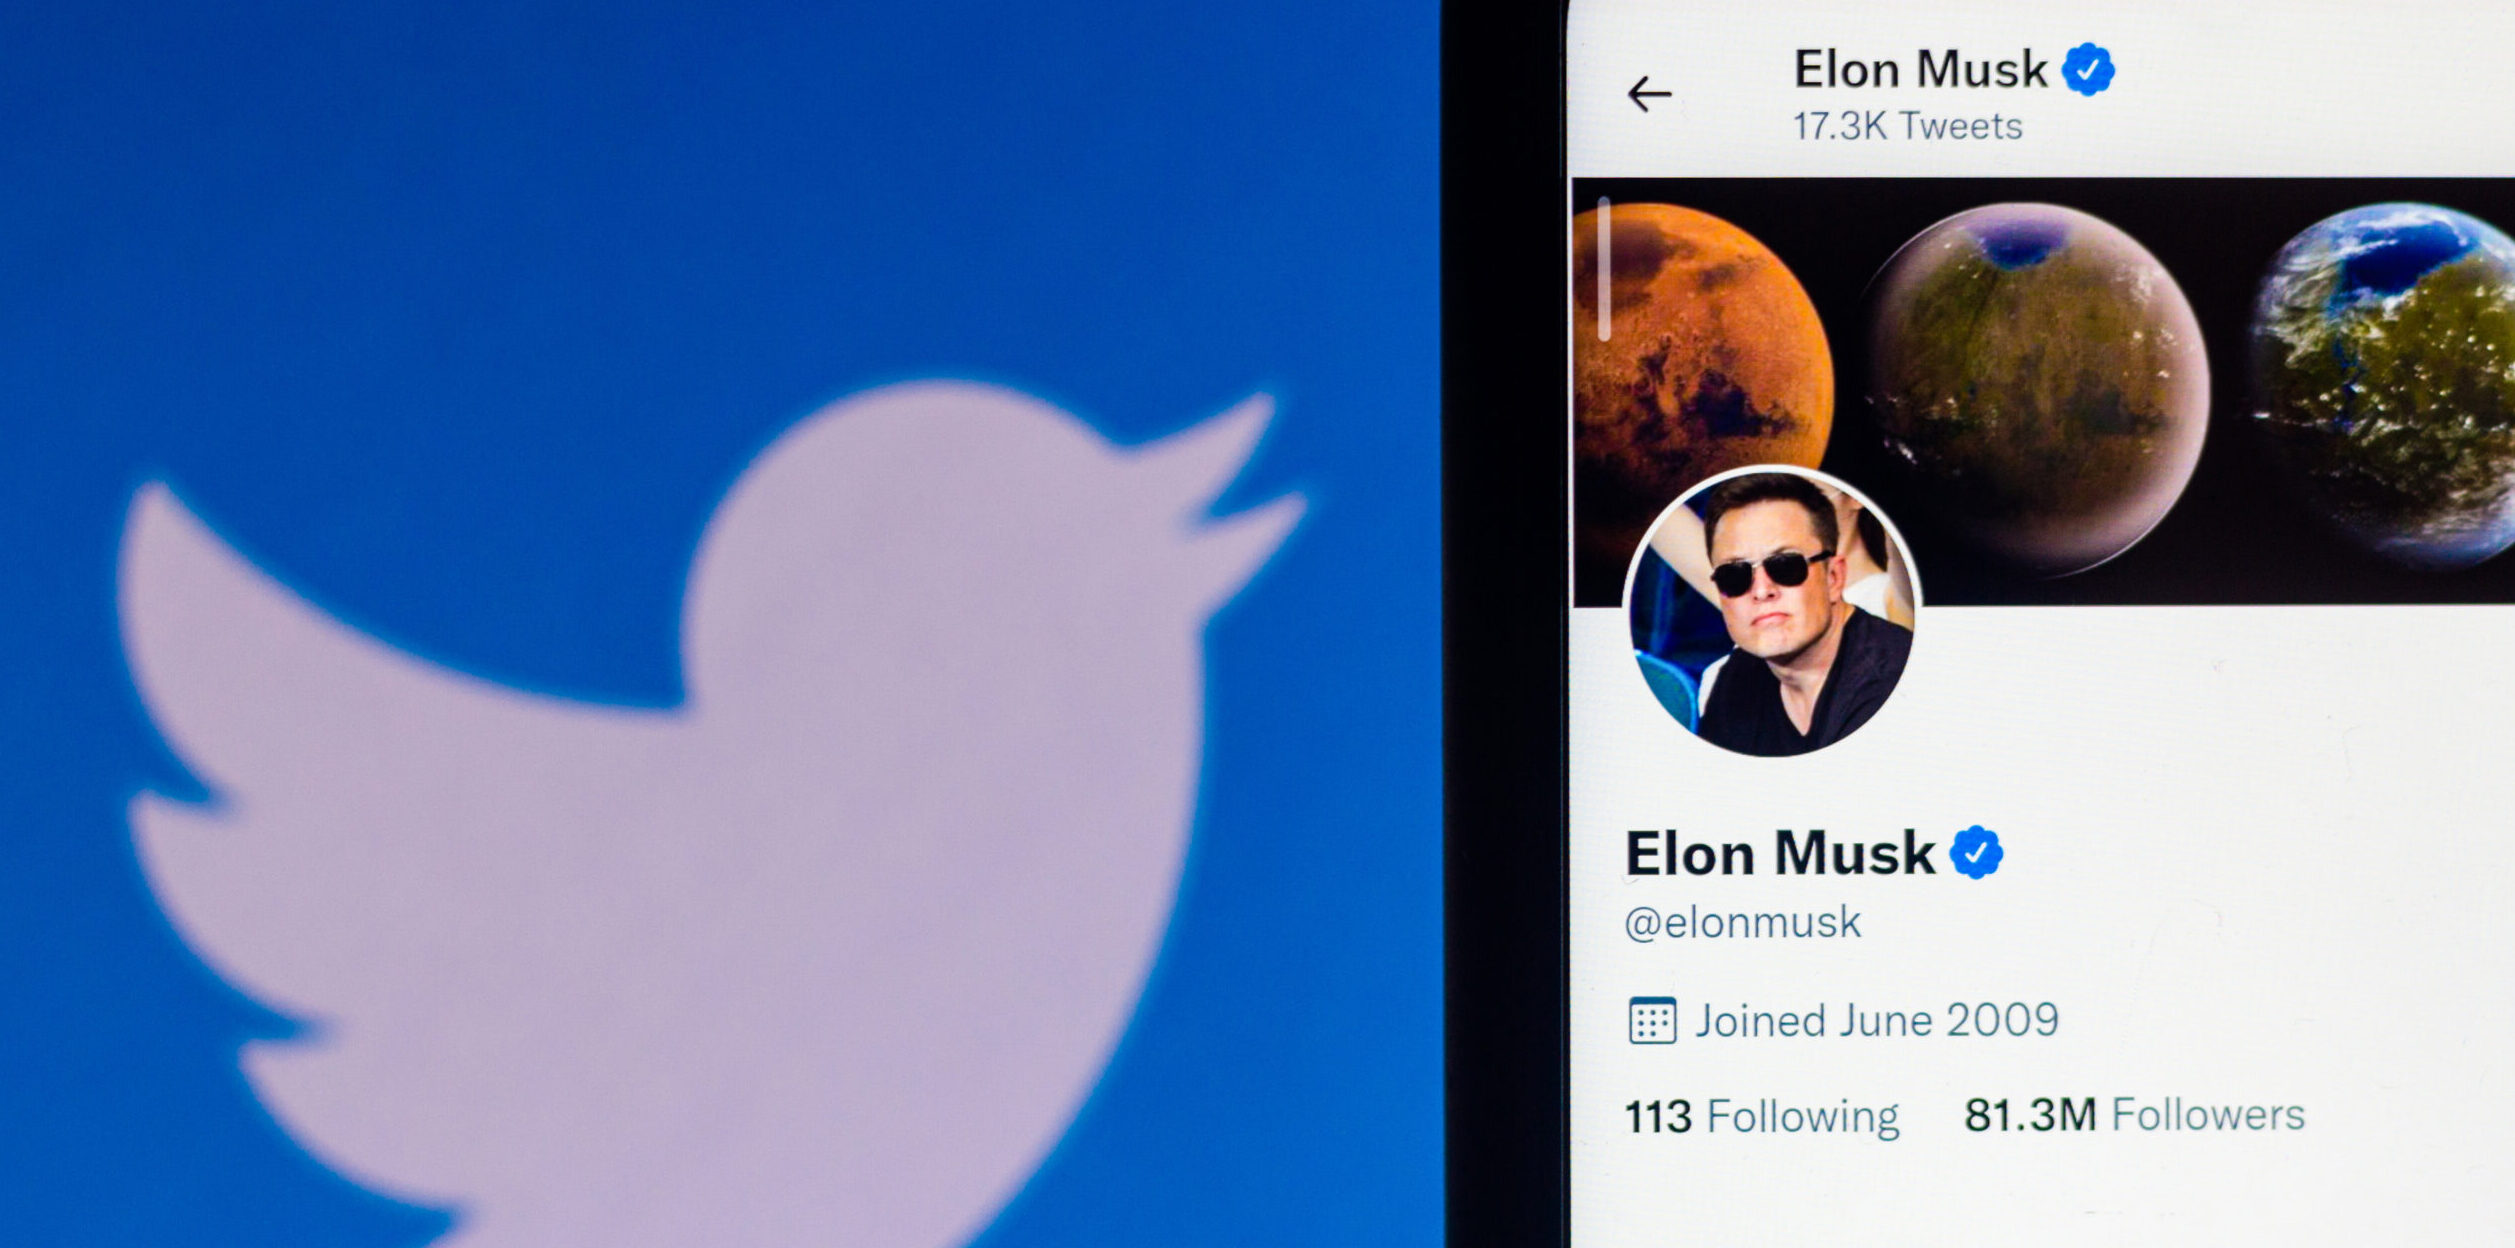 Elon Musk Has Offered To Buy Twitter For $43 Billion